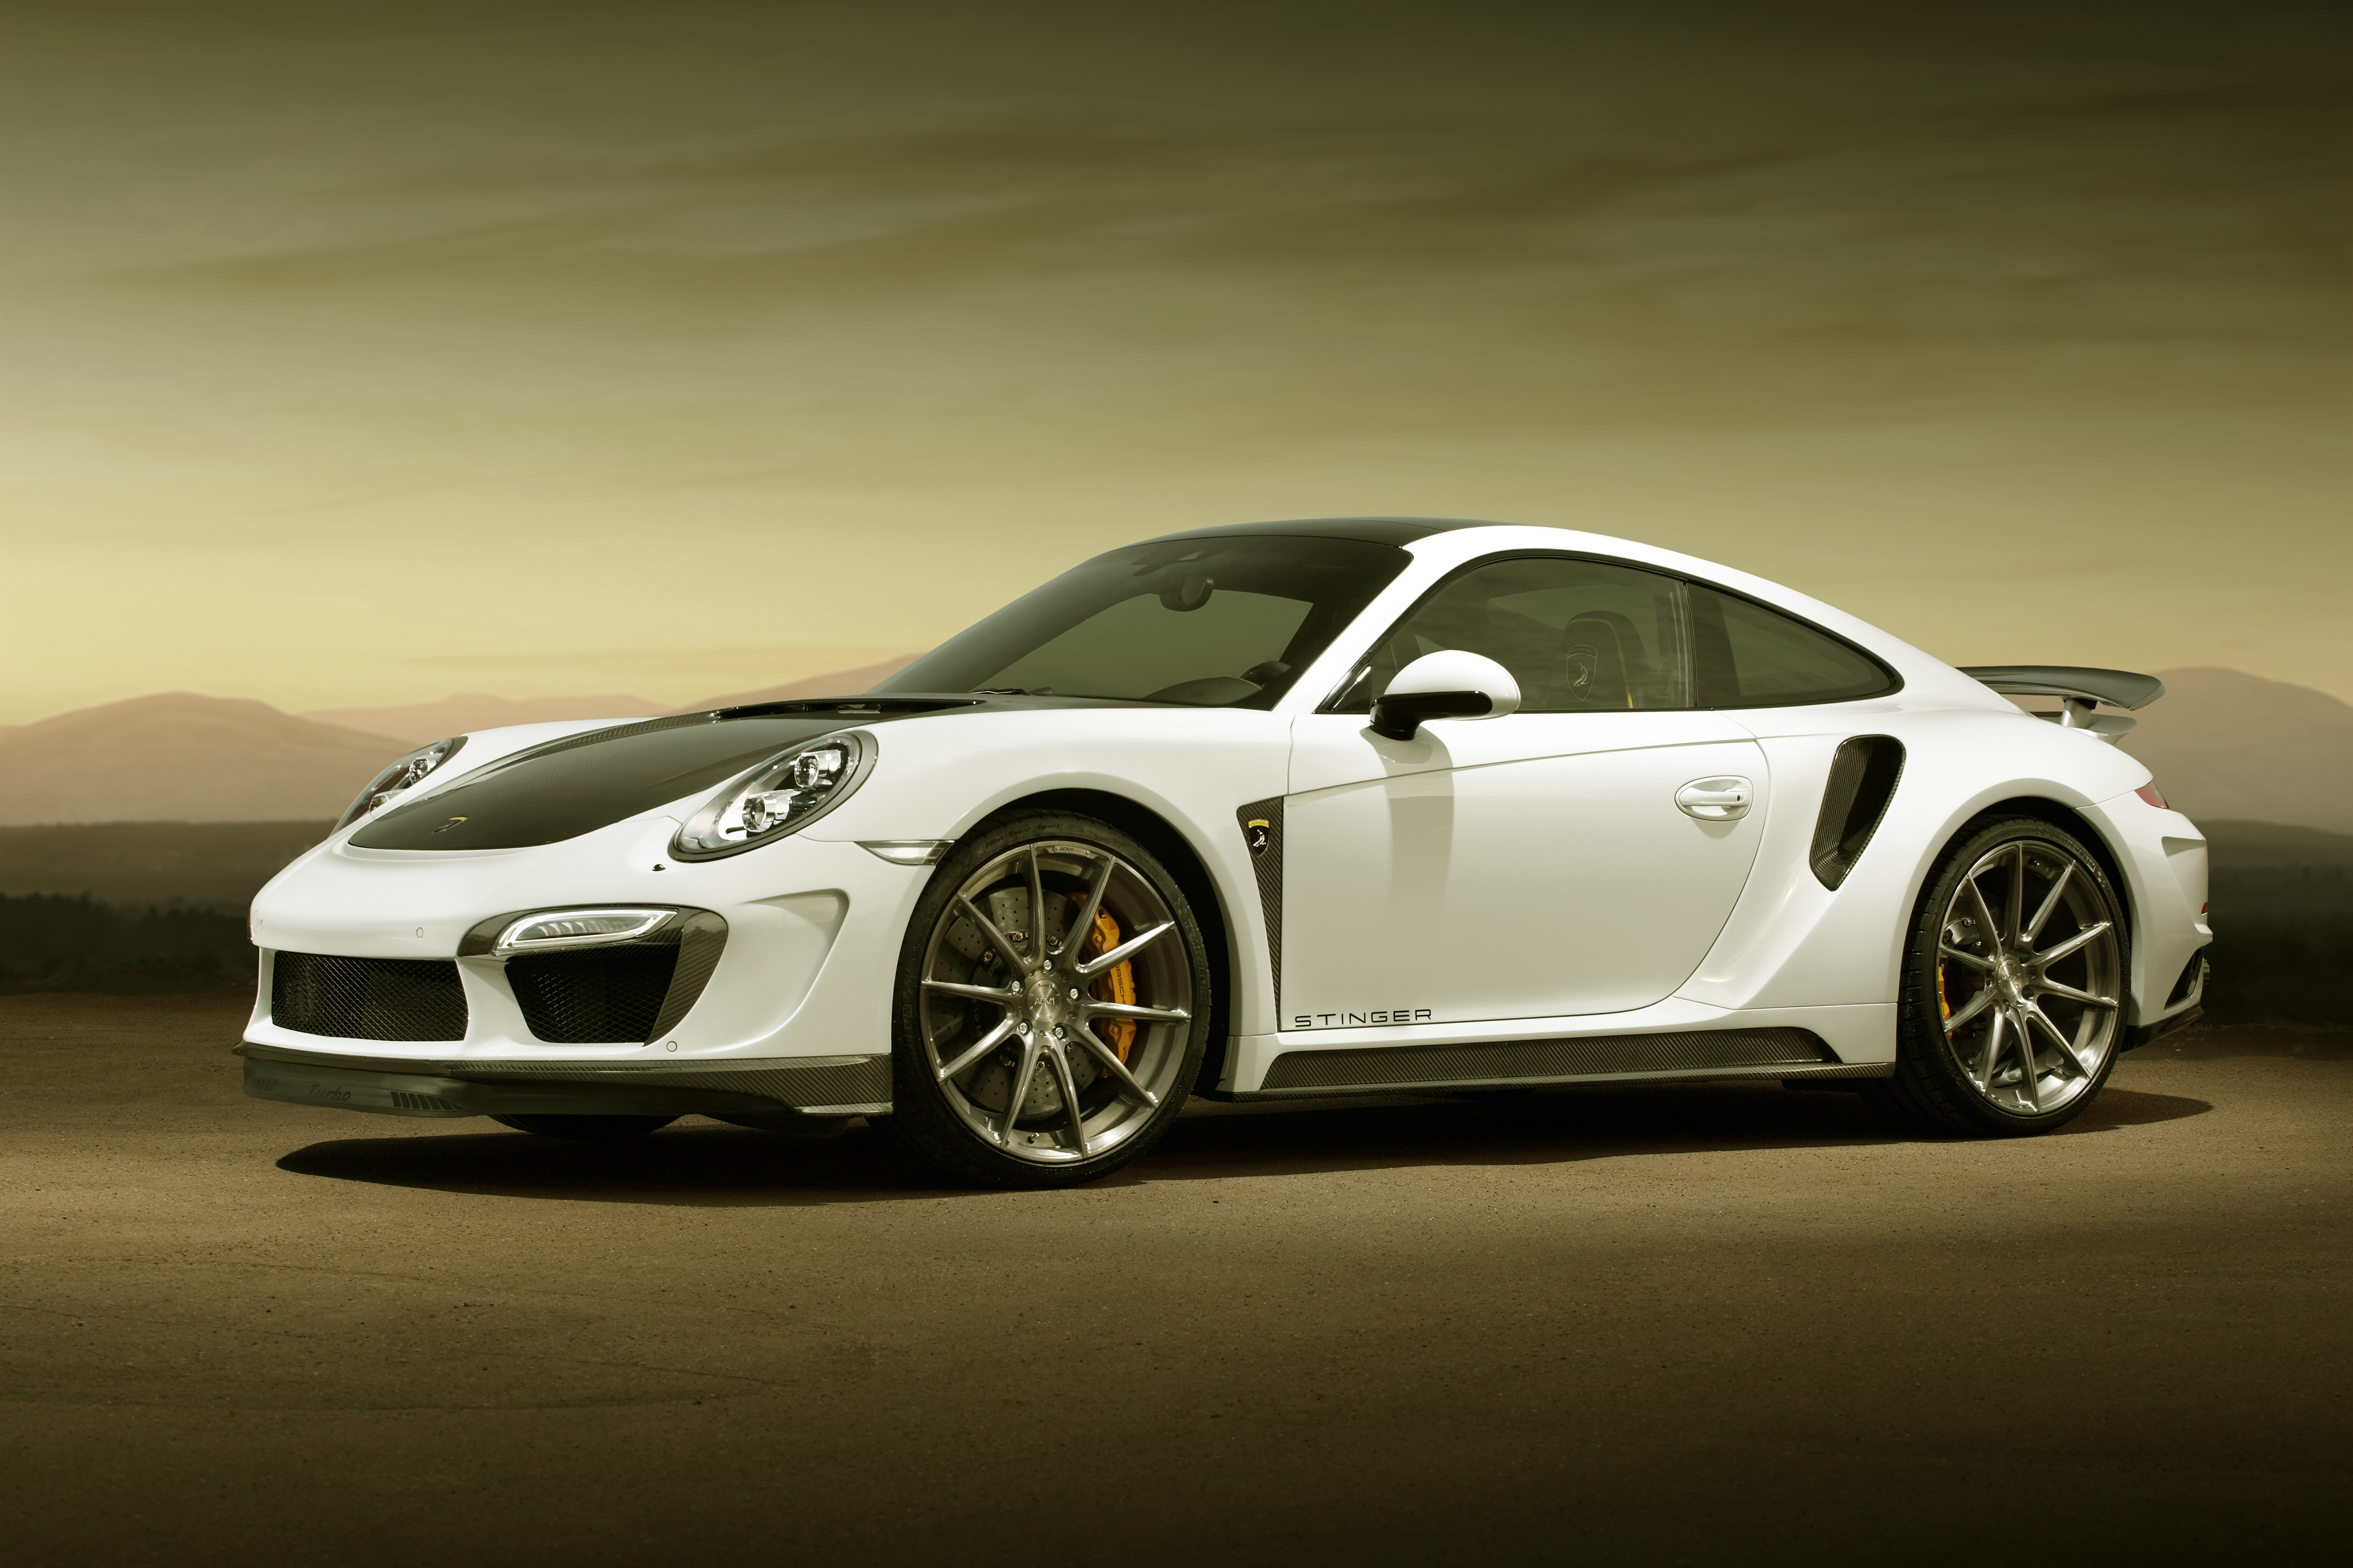 Vehicles Porsche 911 Turbo HD Wallpaper | Background Image